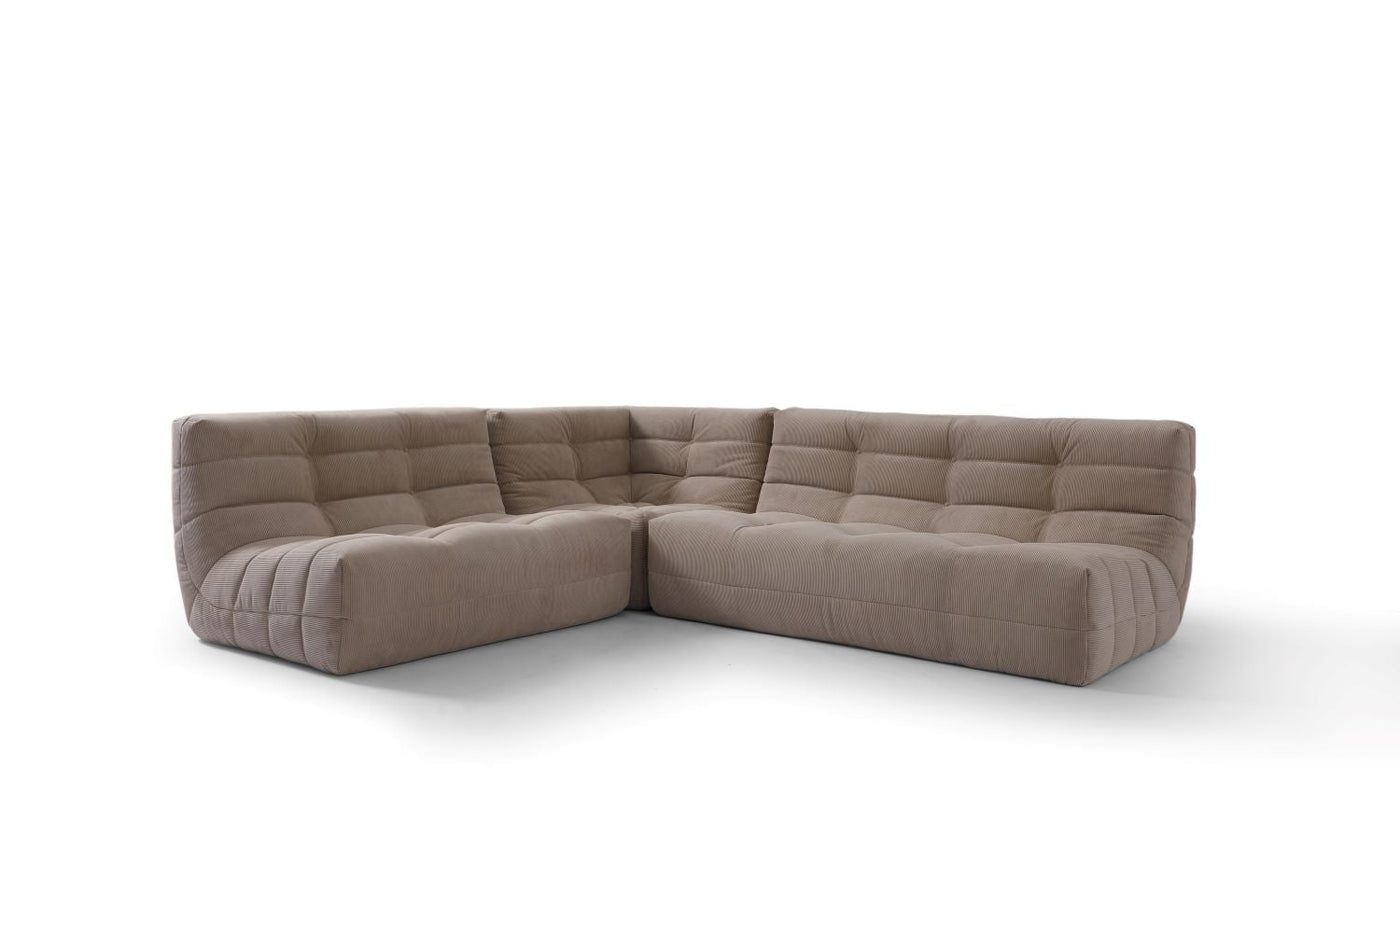 Russo2 sectional 3 piece sofa ( Beige Cordury)